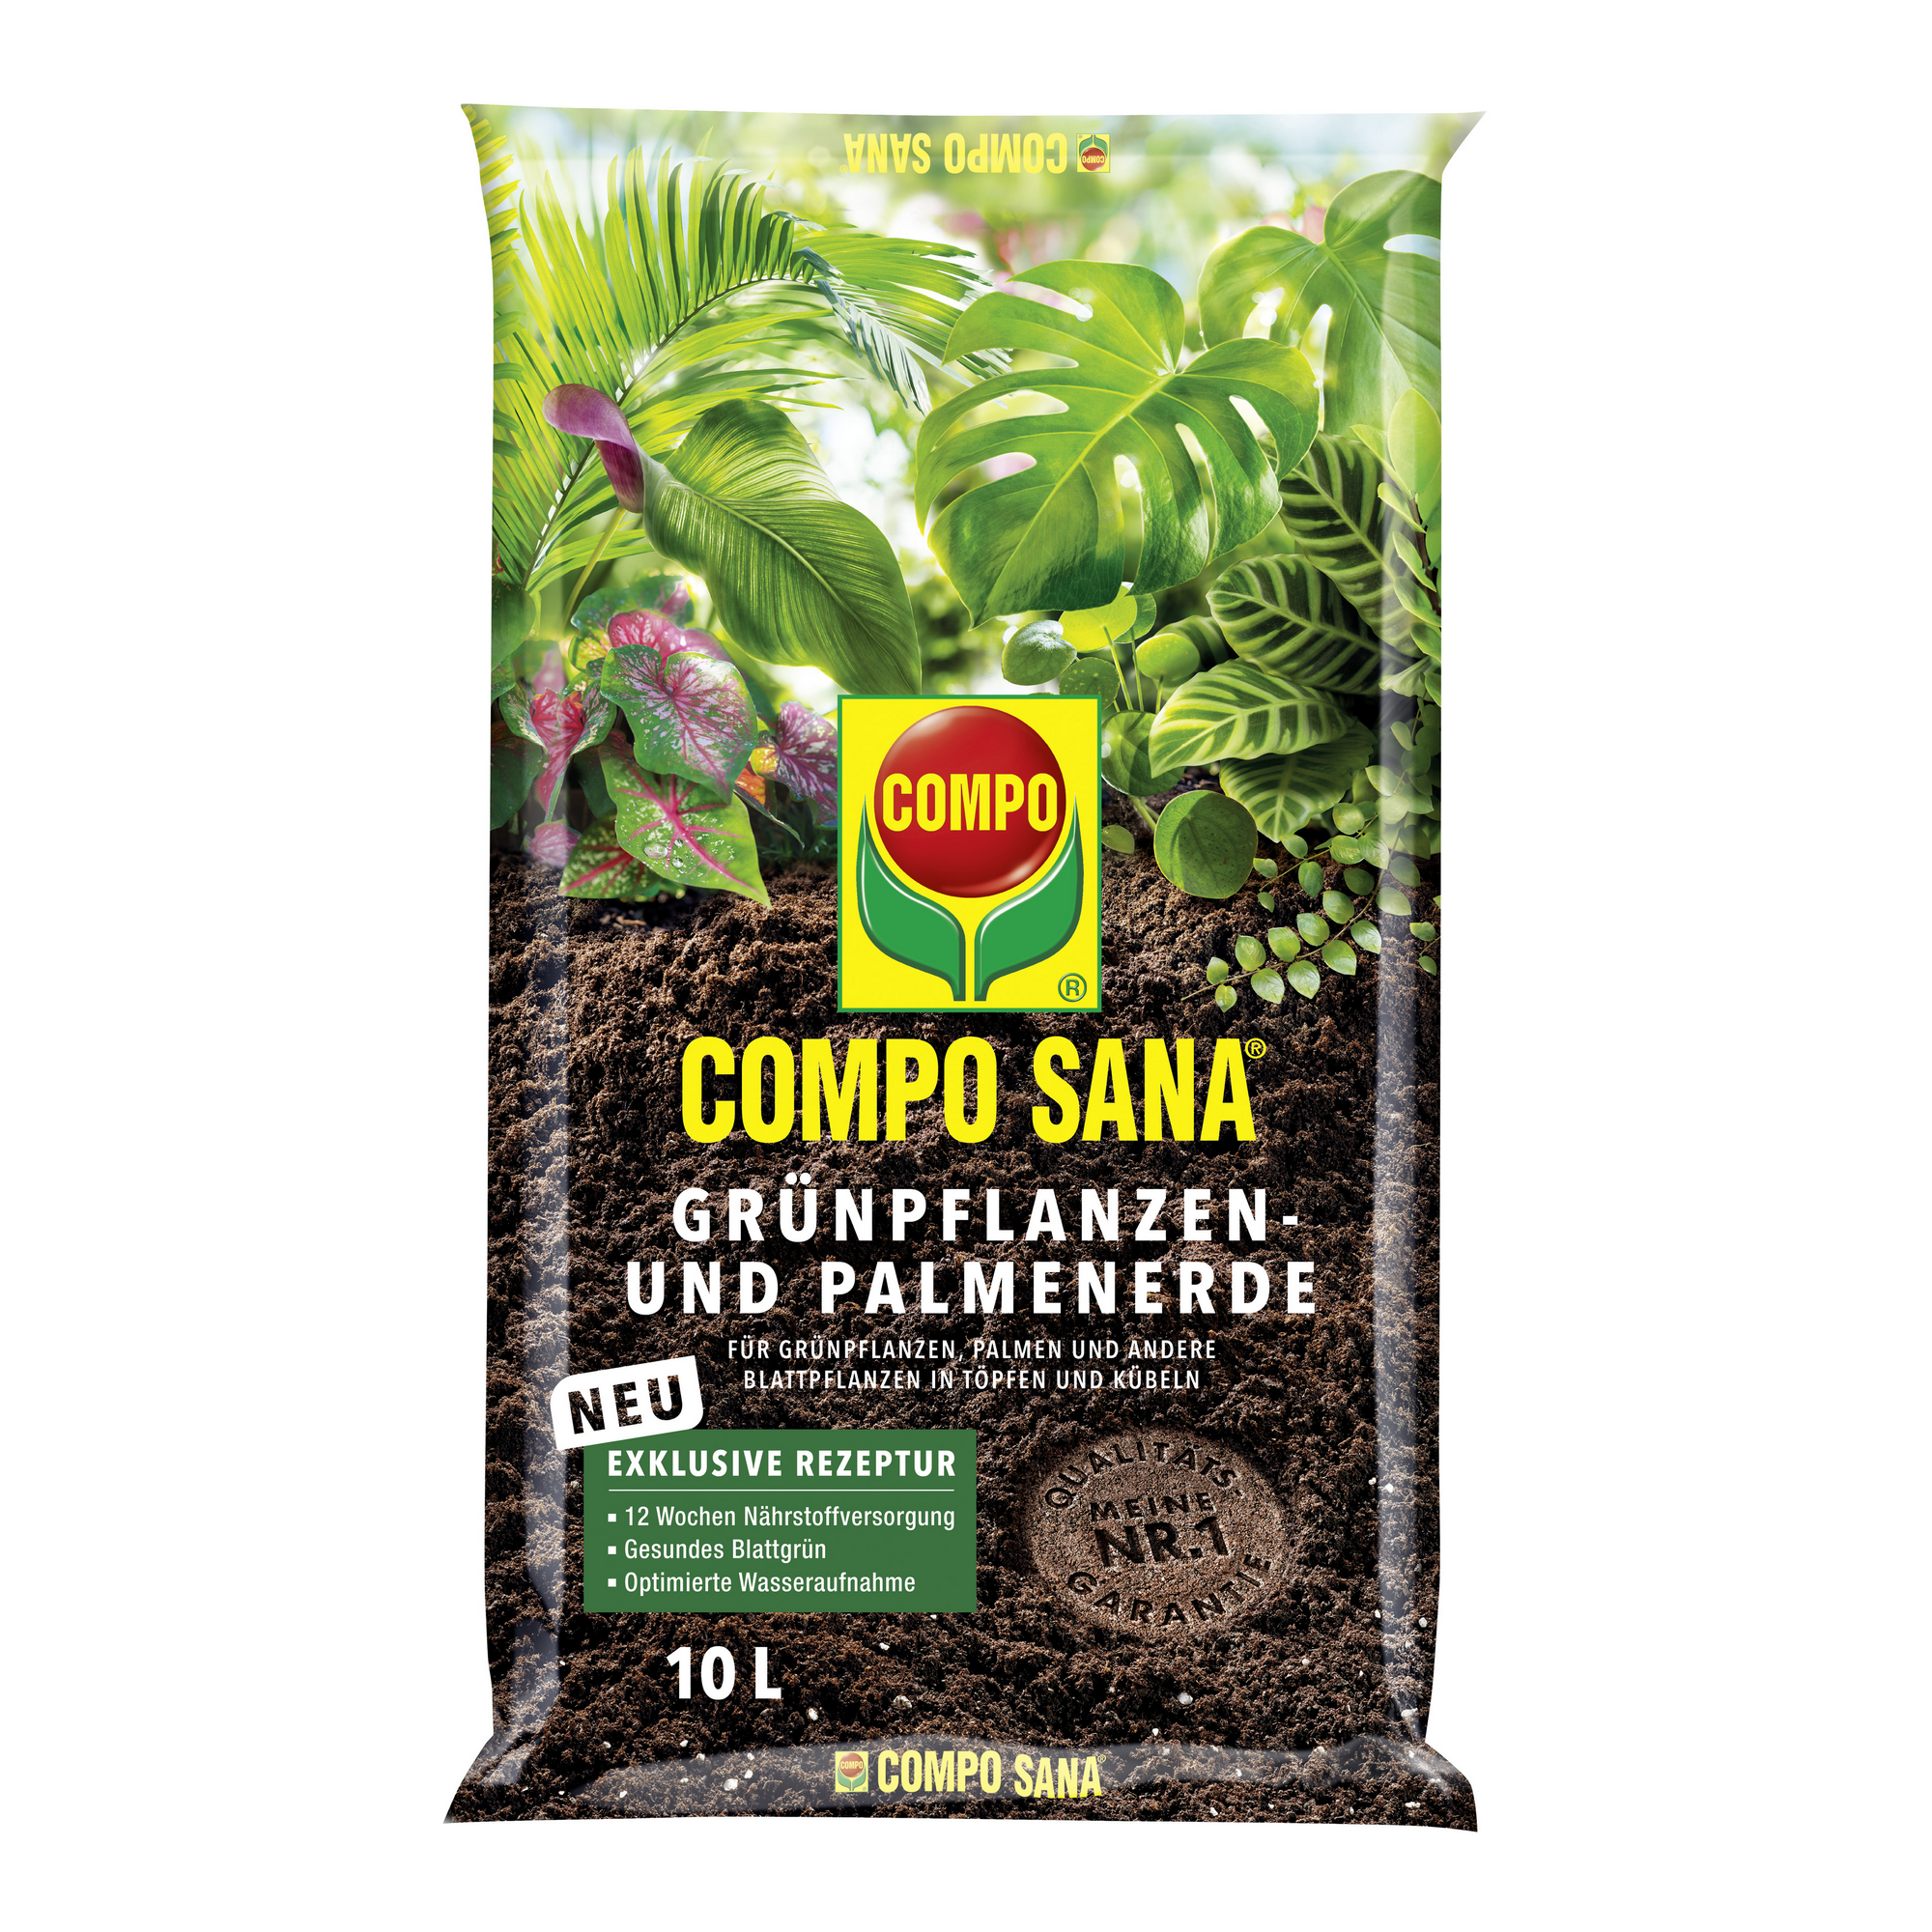 Compo Sana® Grünpflanzen- und Palmenerde 10 l + product picture